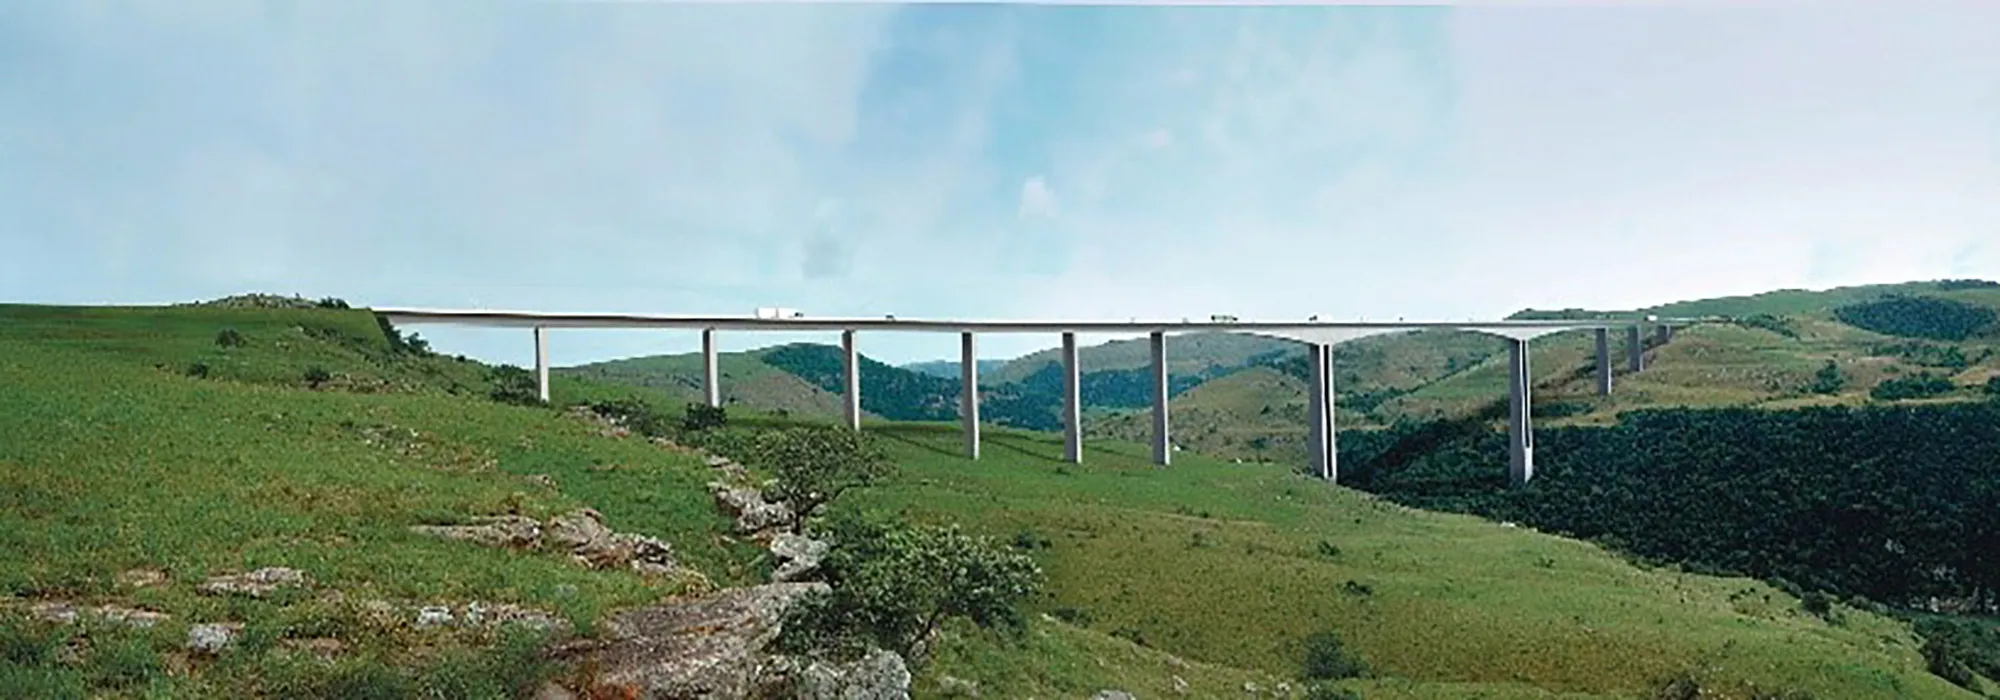 Sanral's proposed Mtentu Bridge in the Eastern Cape.